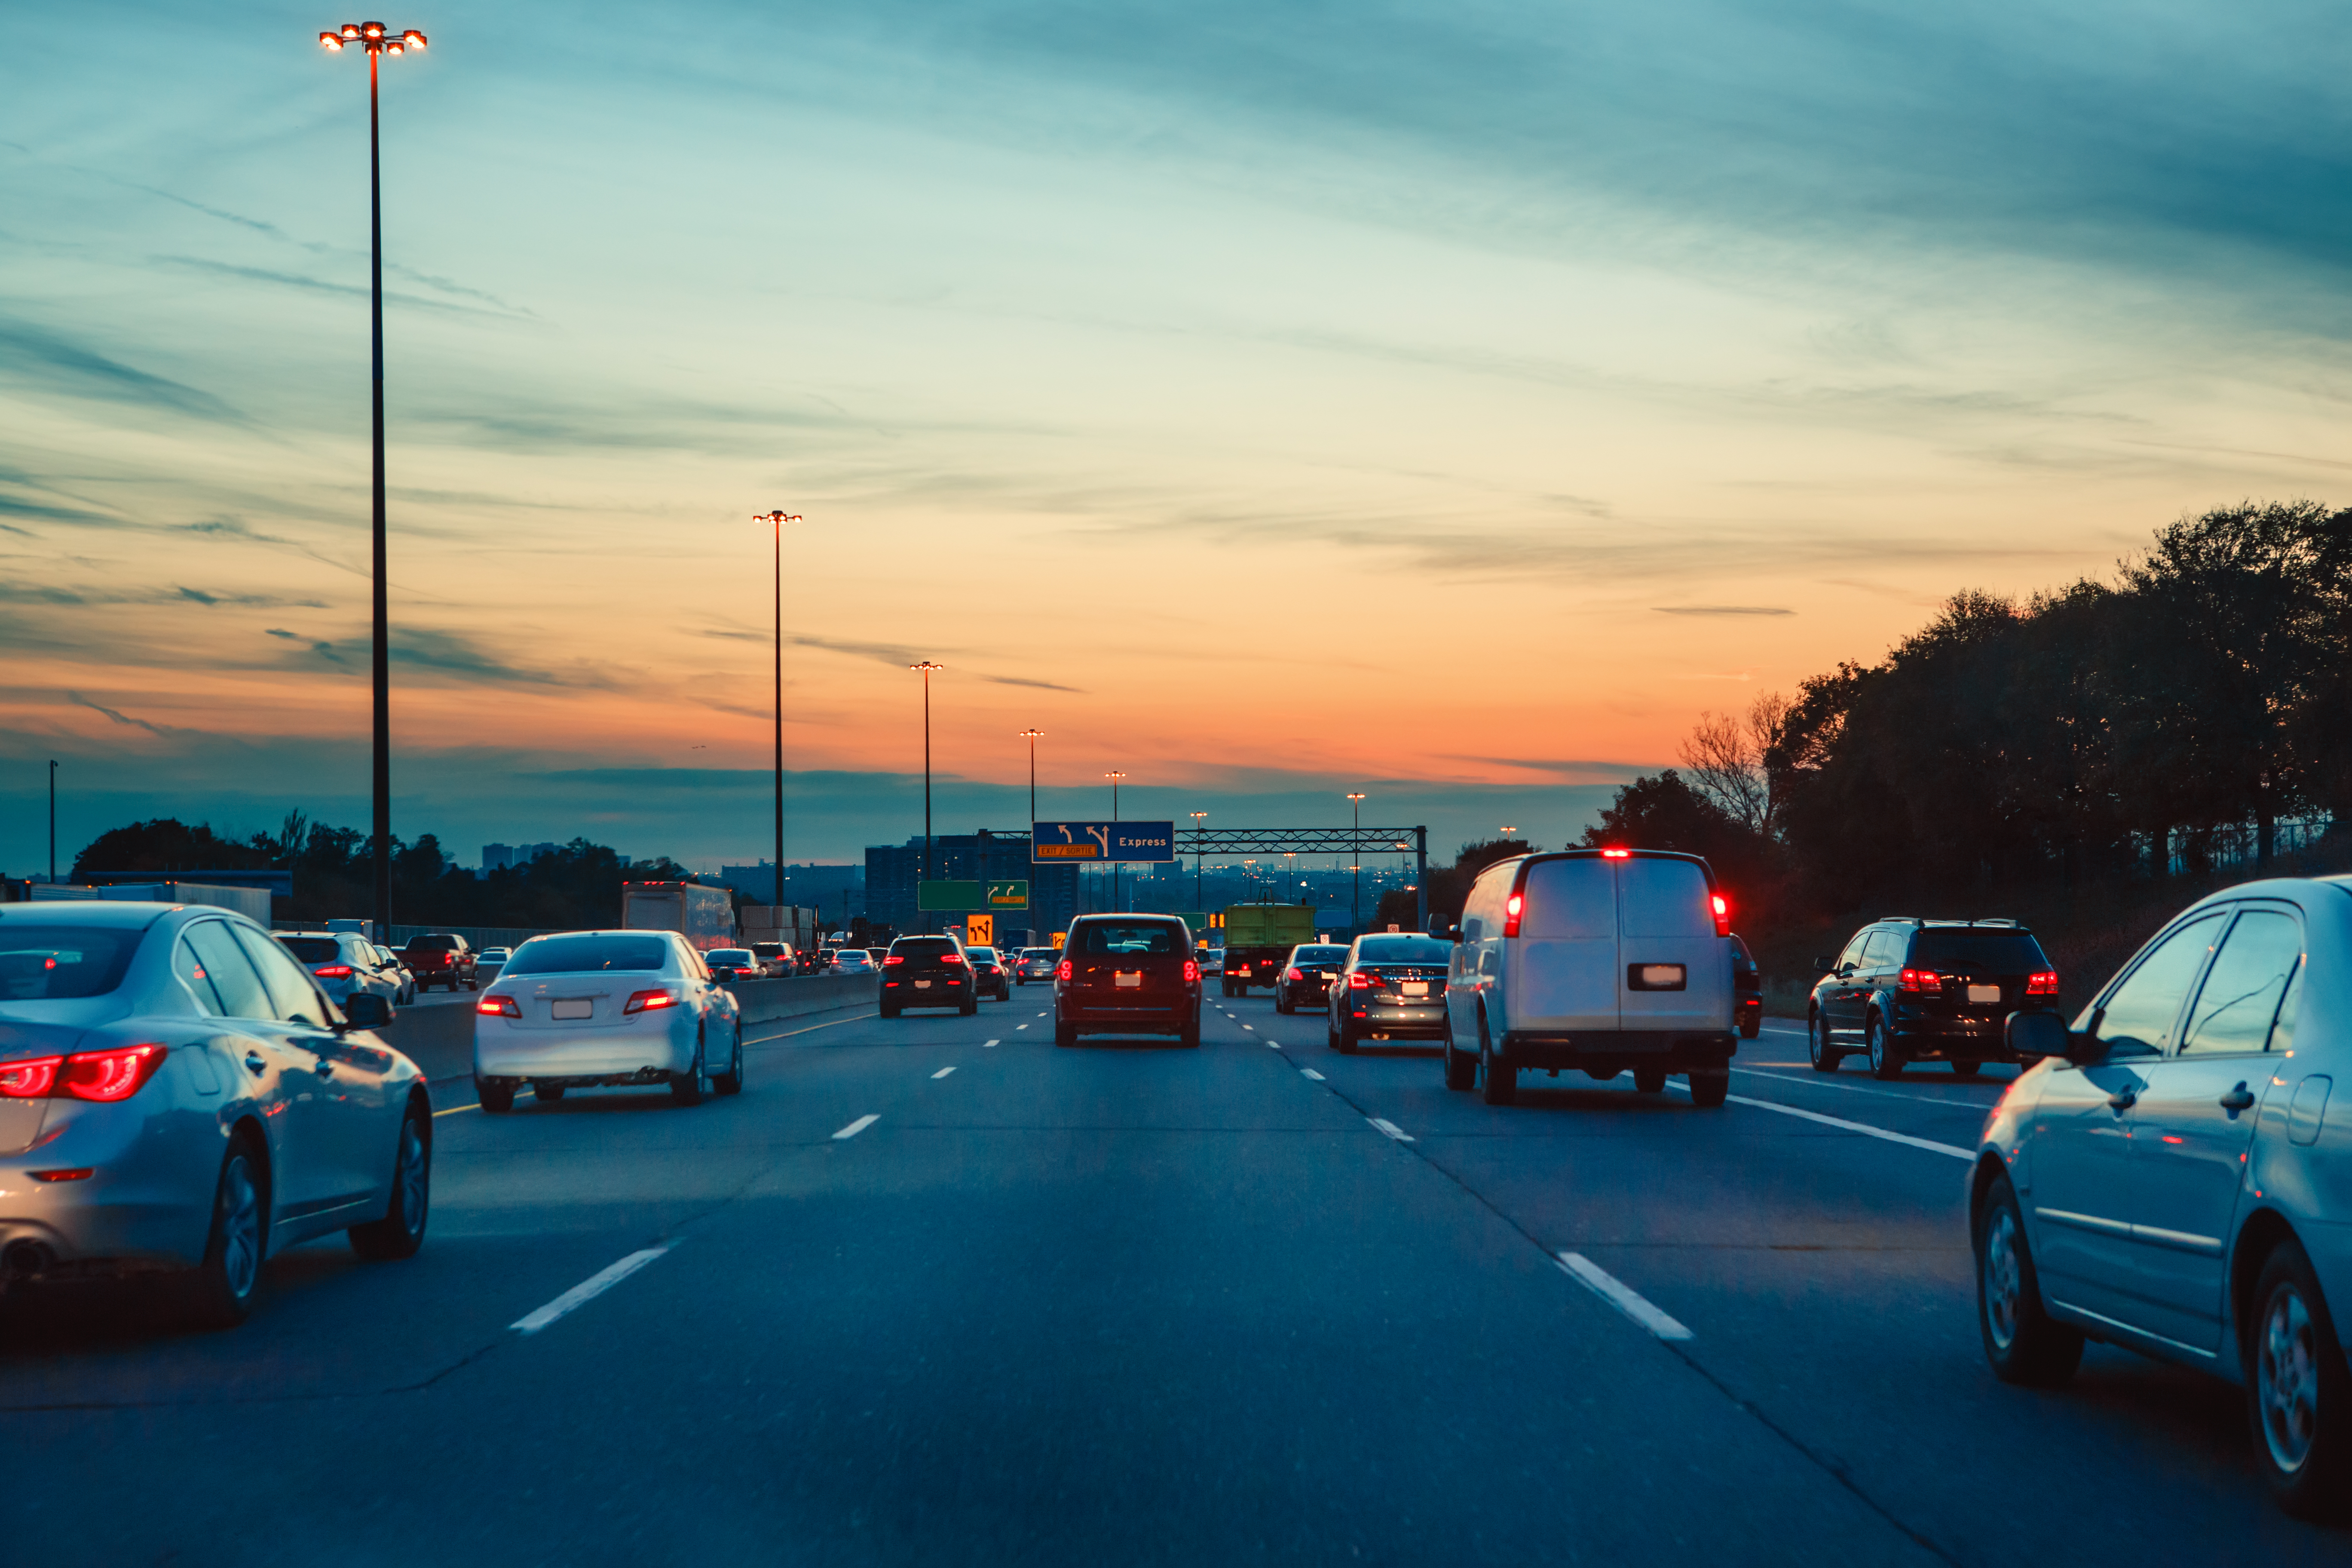 Night traffic | Source: Shutterstock